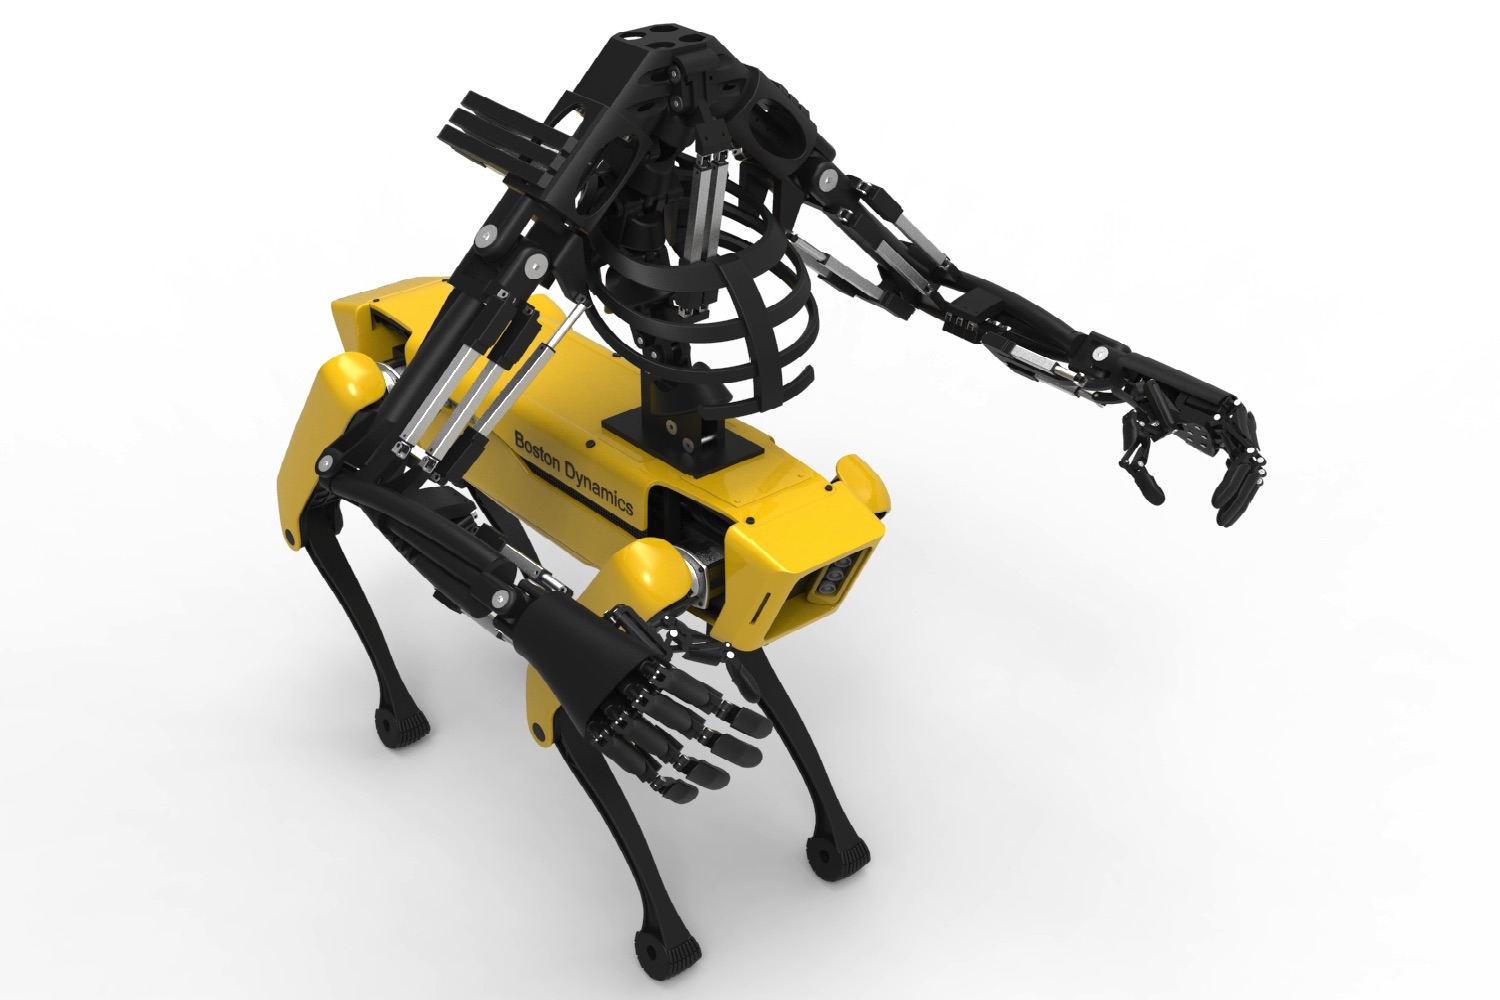 centaur robot youbionic spotmini cyber 4